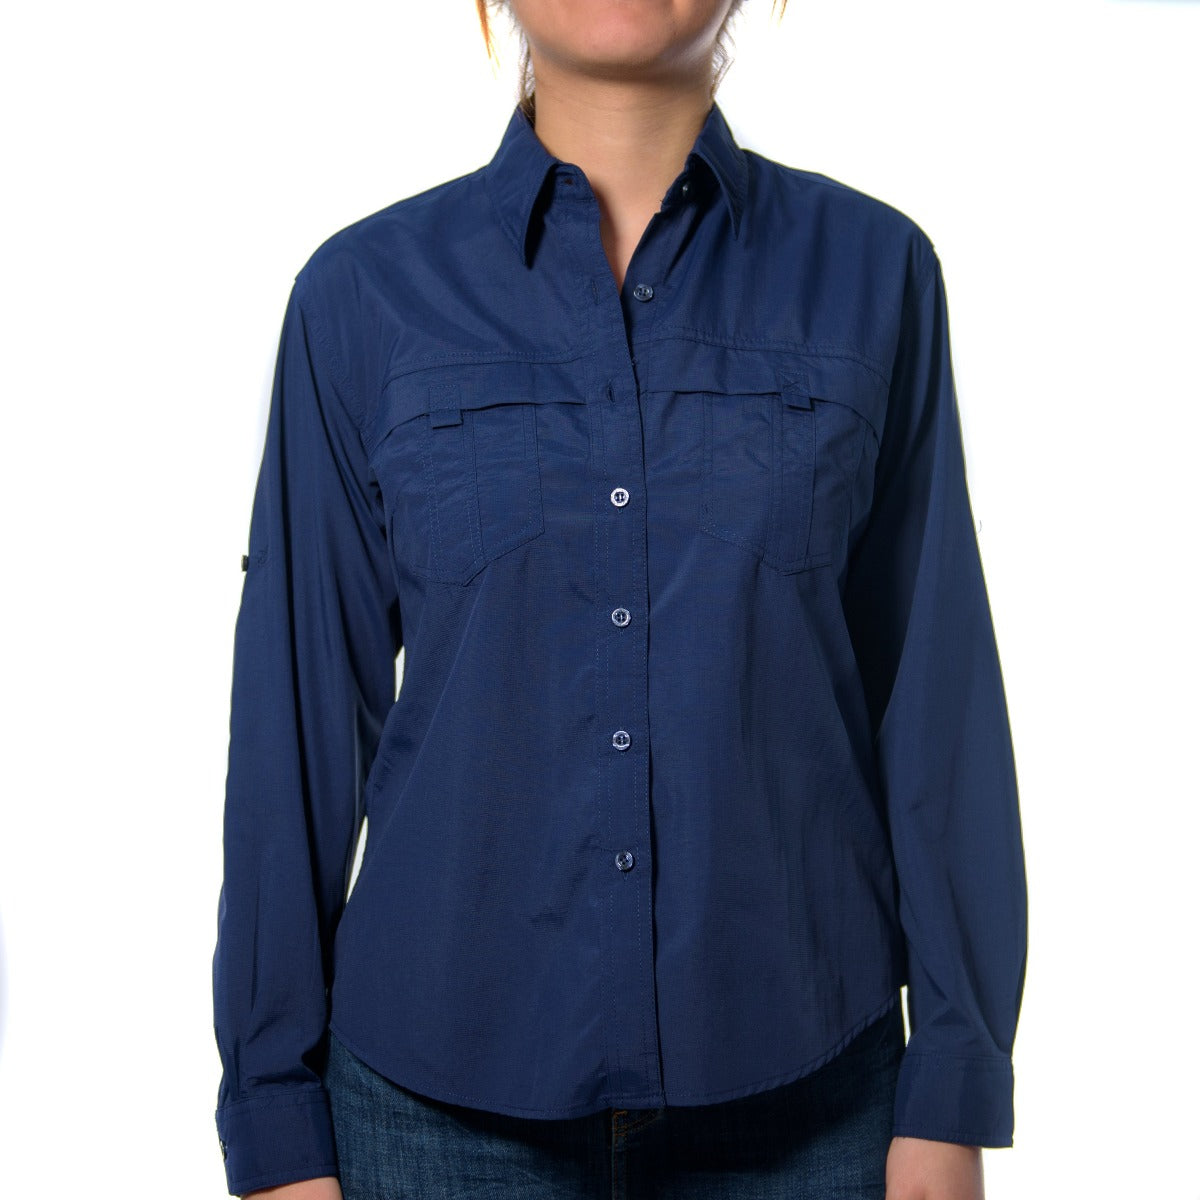 Camiseta cuello alto manga larga azul marino mujer